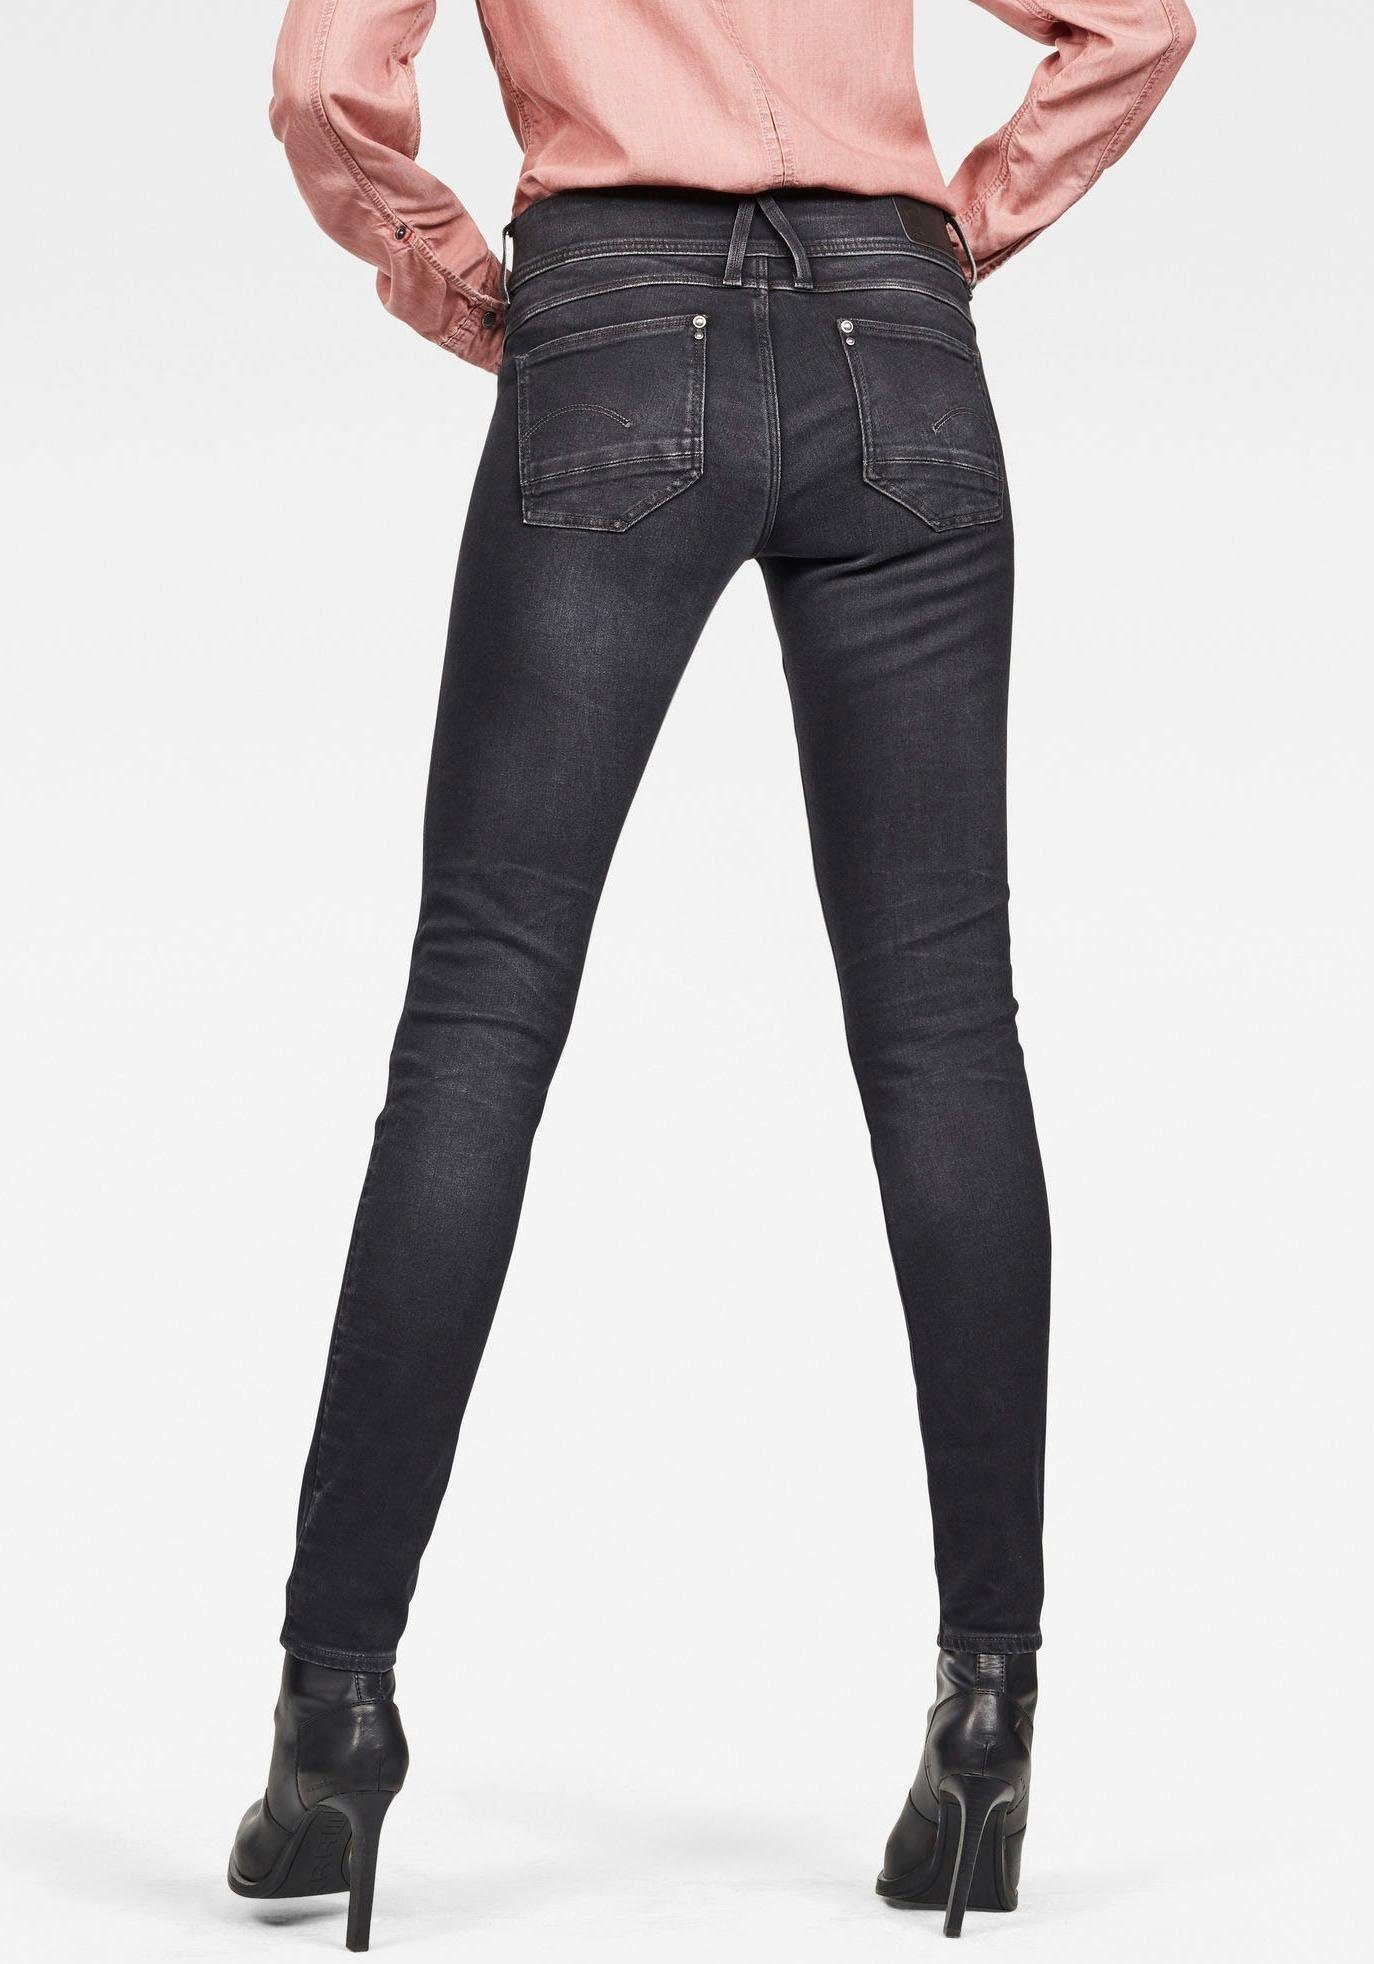 G-Star RAW Skinny-fit-Jeans Mid Waist Skinny mit Elasthan-Anteil dusty grey, Elto nero black superstretch